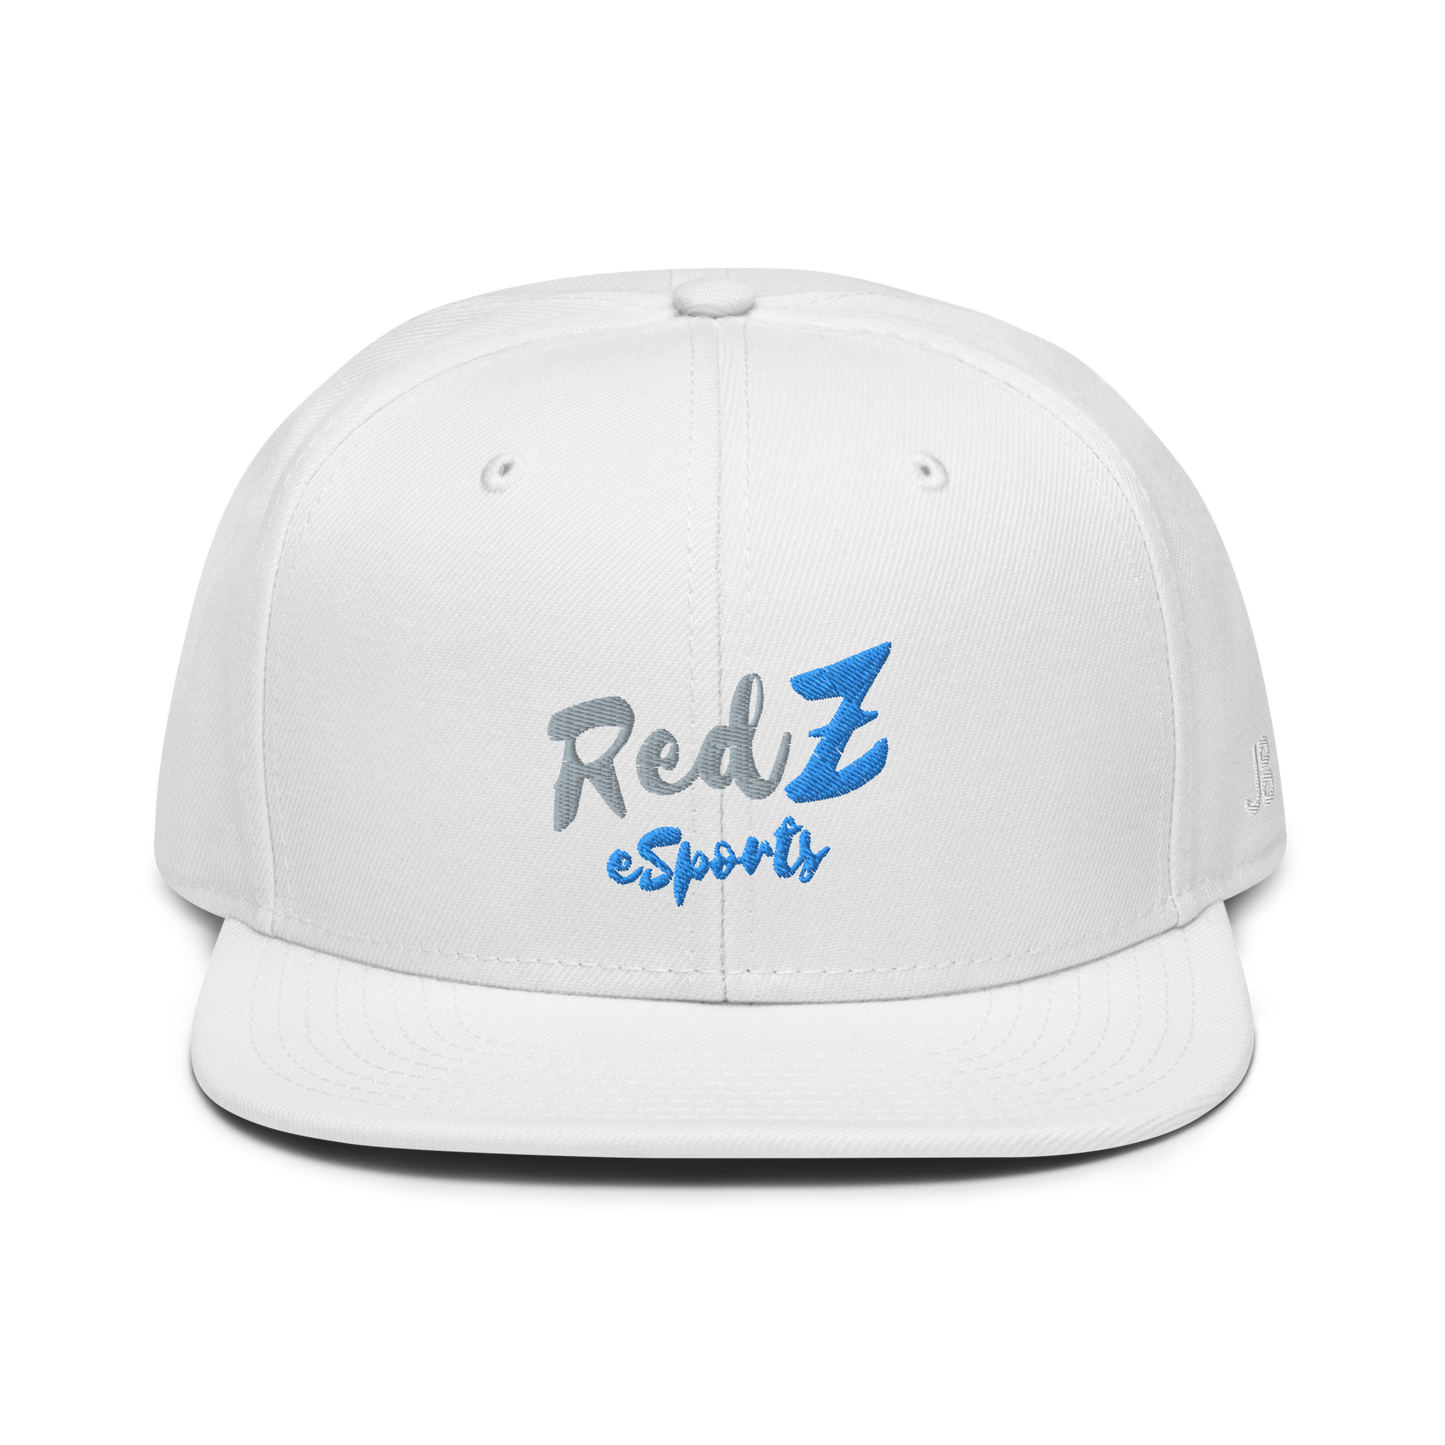 REDZ ESPORTS - Snapback Cap Blue